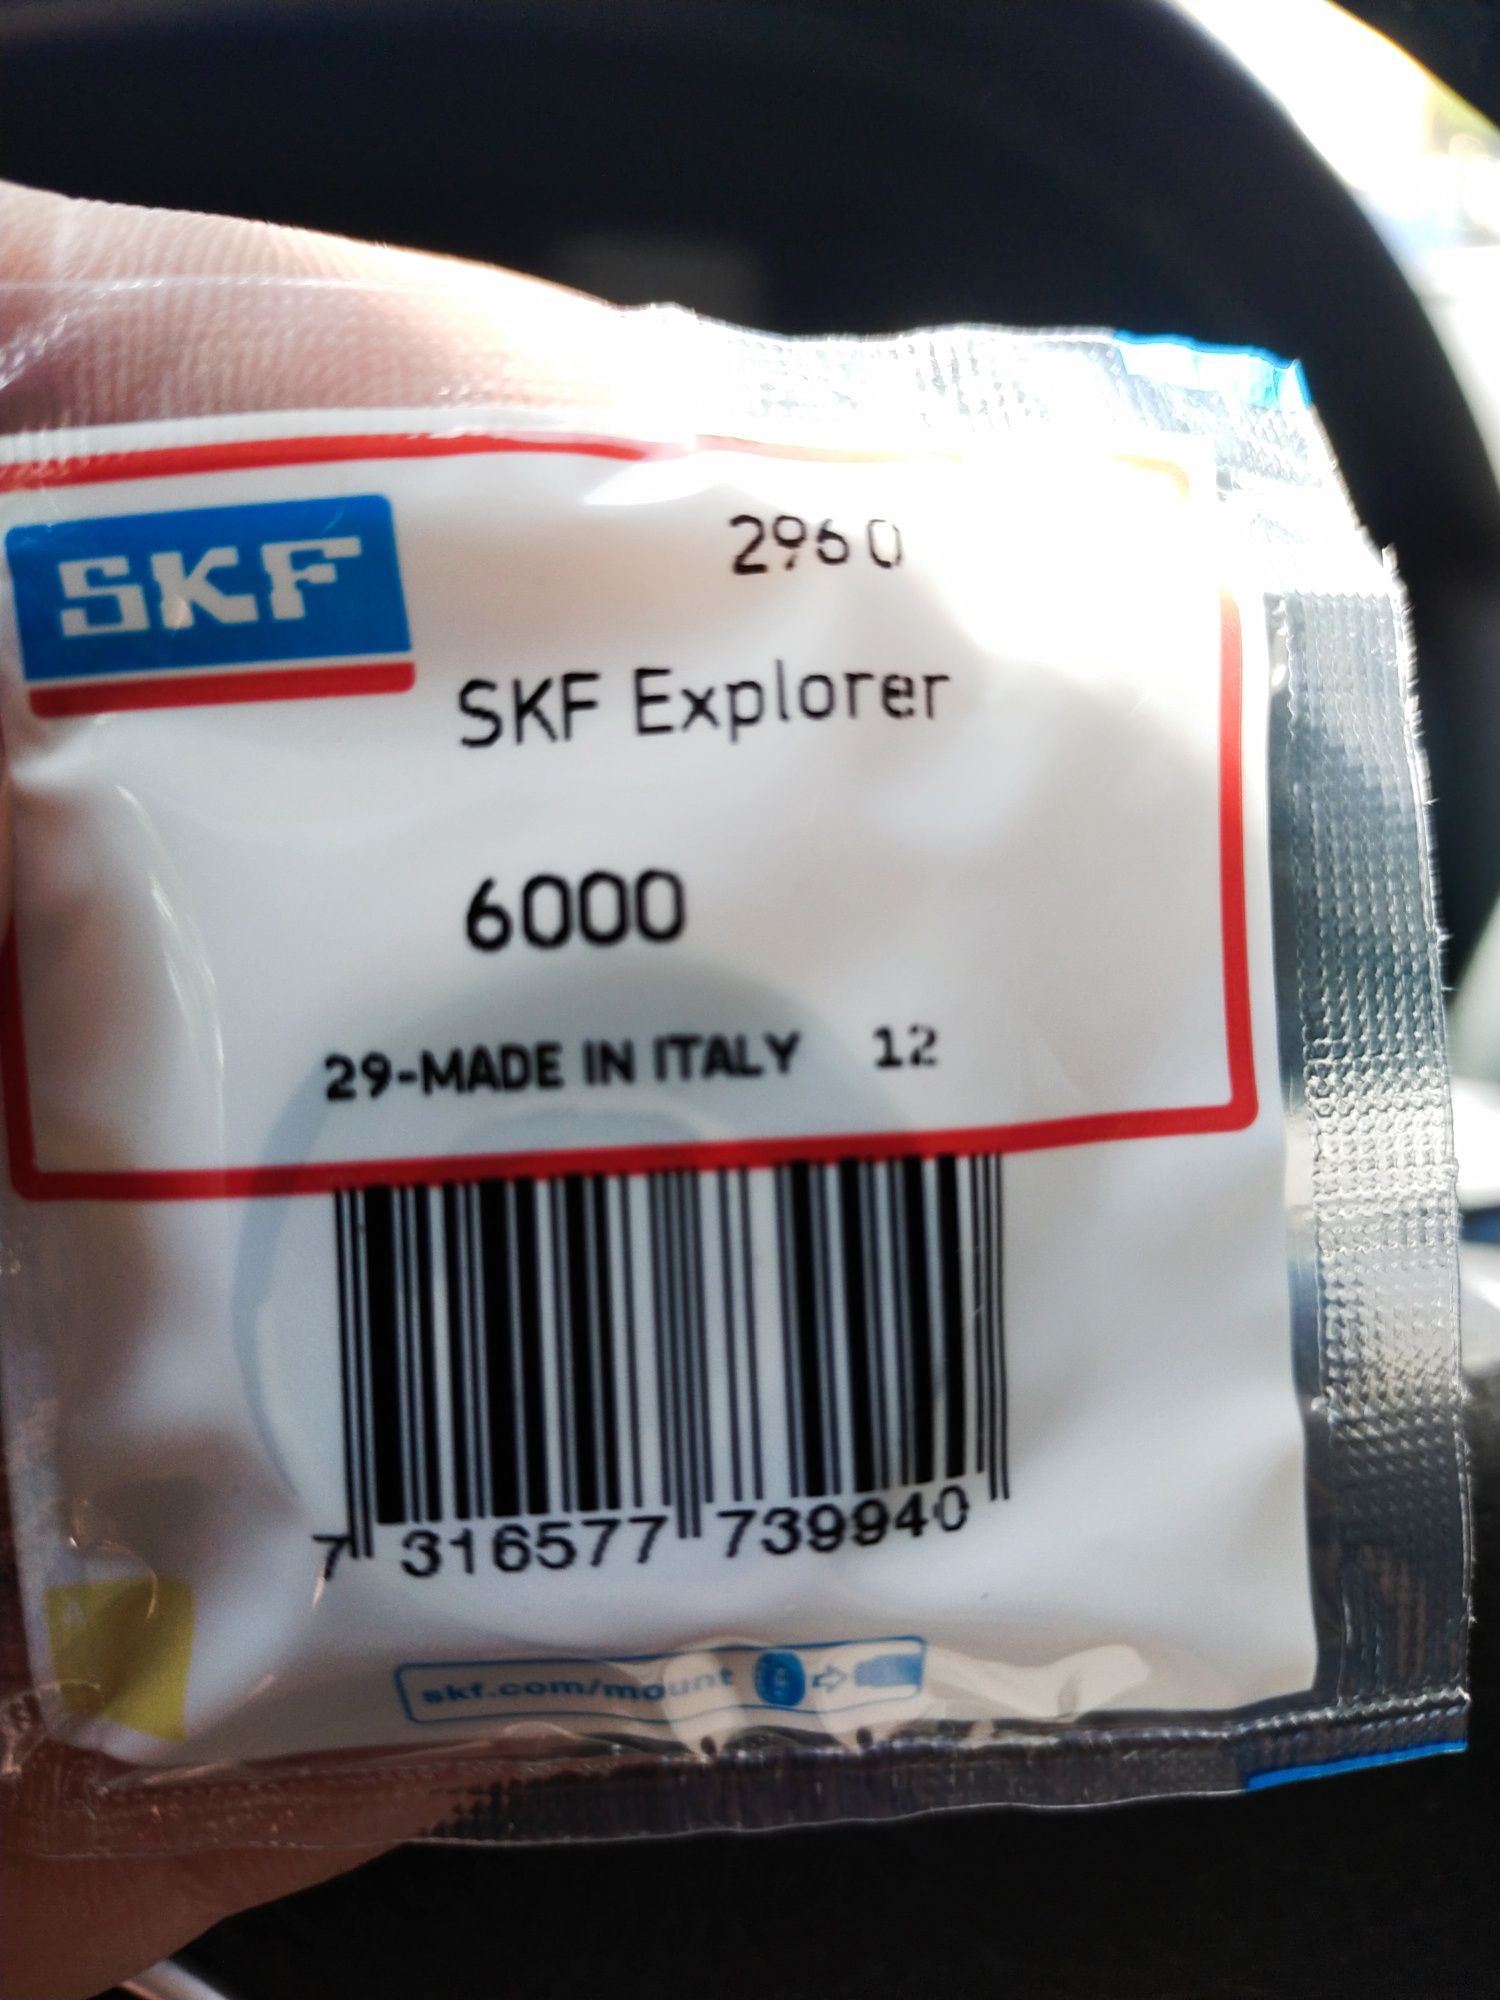 Łożysko kulowe SKF 2960 Explorer 6000